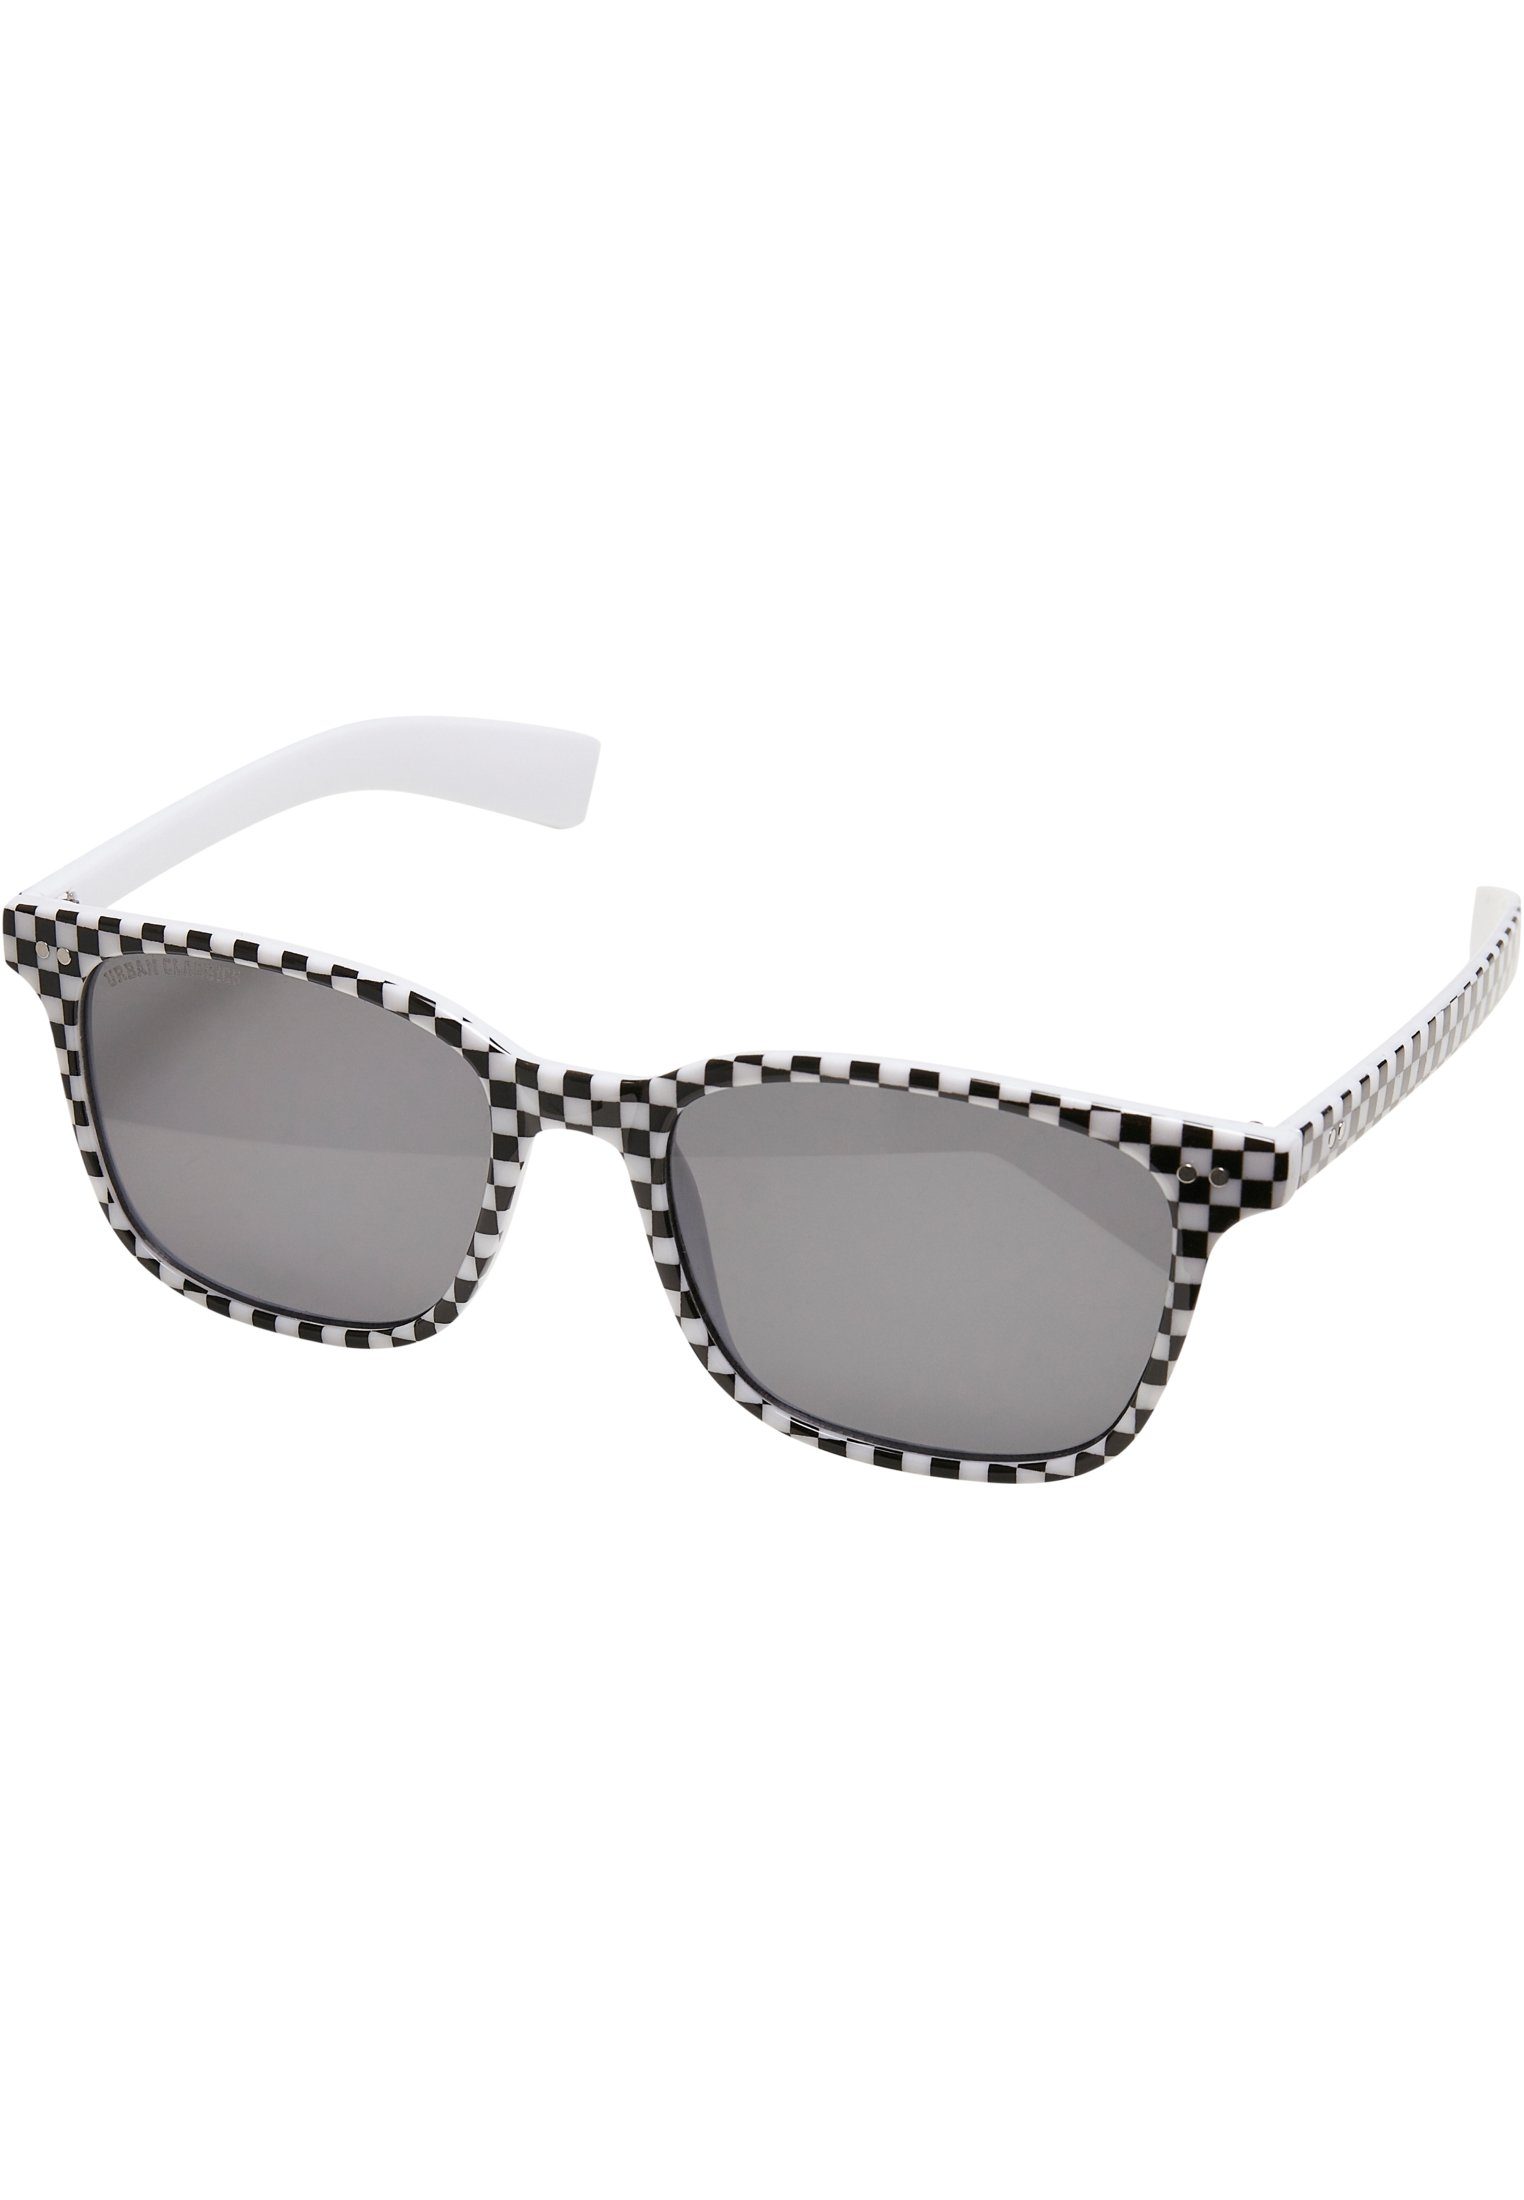 Sunglasses Sonnenbrille Unisex Faial CLASSICS URBAN